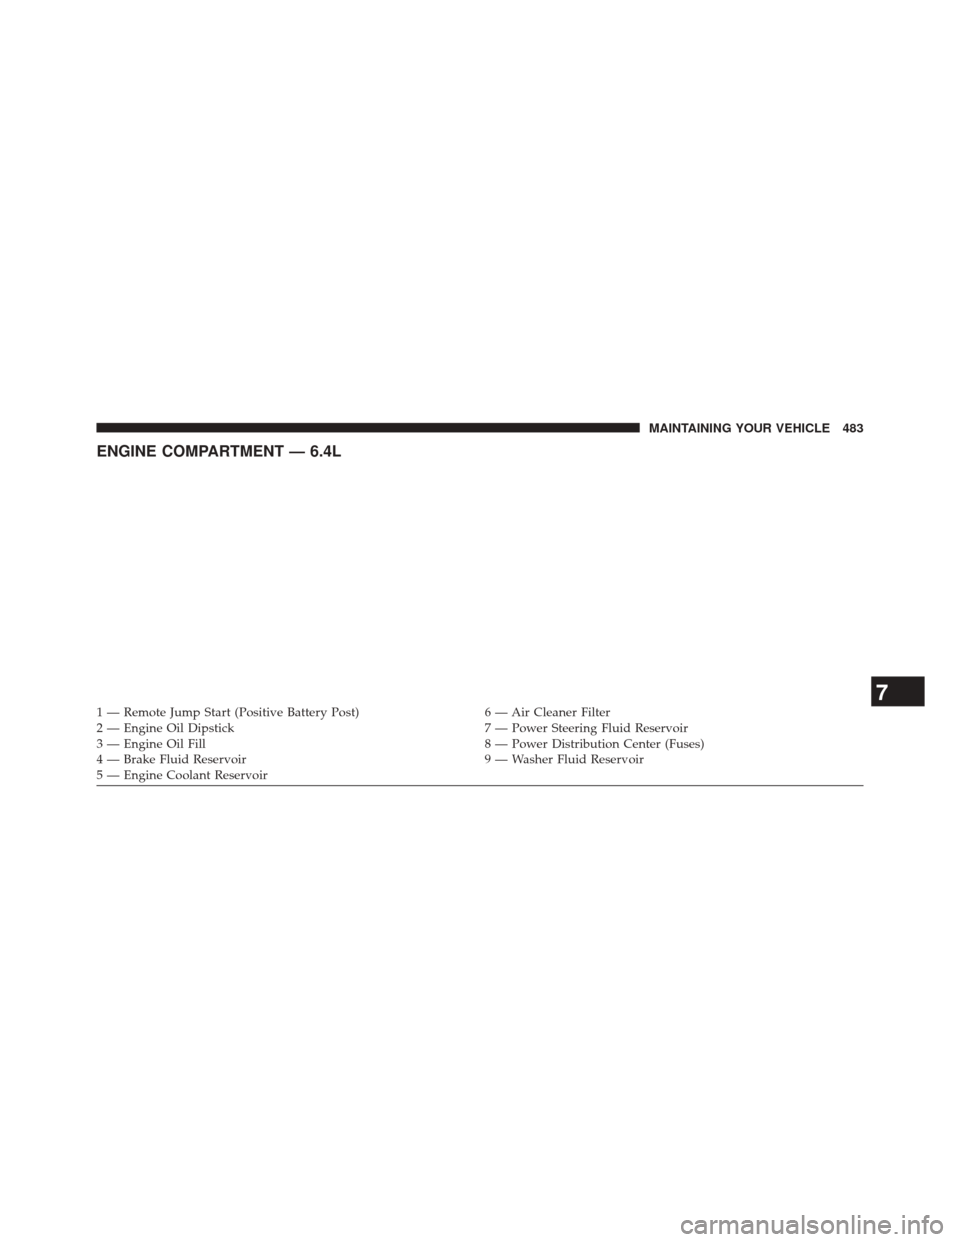 CHRYSLER 300 SRT 2014 2.G Owners Manual ENGINE COMPARTMENT — 6.4L
1 — Remote Jump Start (Positive Battery Post)6 — Air Cleaner Filter
2 — Engine Oil Dipstick 7 — Power Steering Fluid Reservoir
3 — Engine Oil Fill 8 — Power Dis